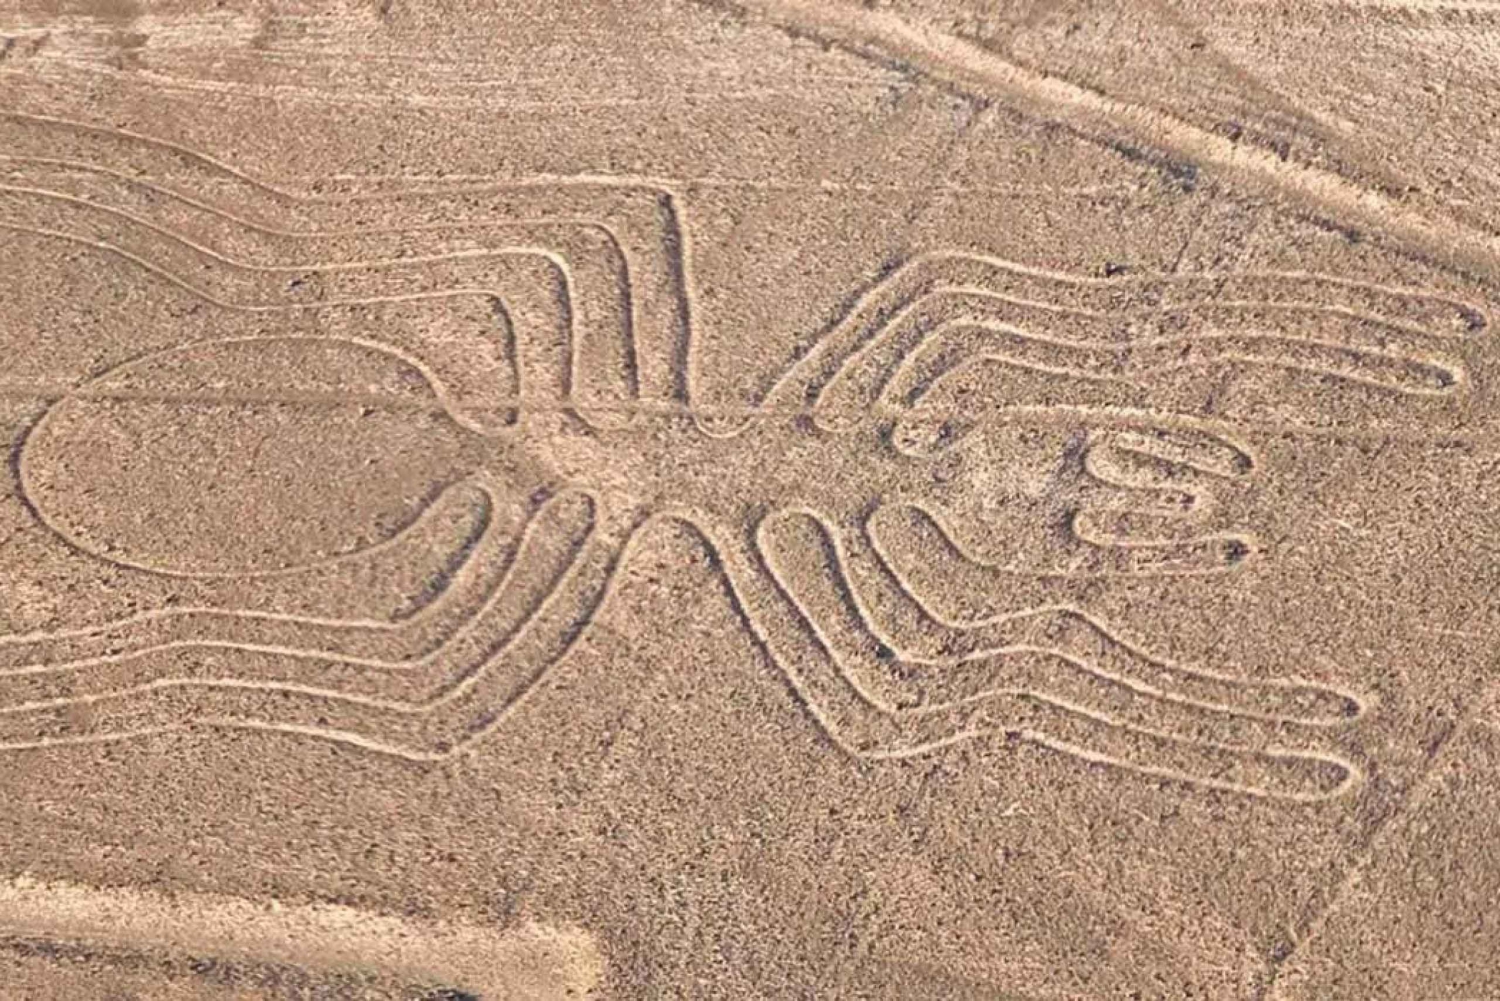 Nazca Lines Plane Ride